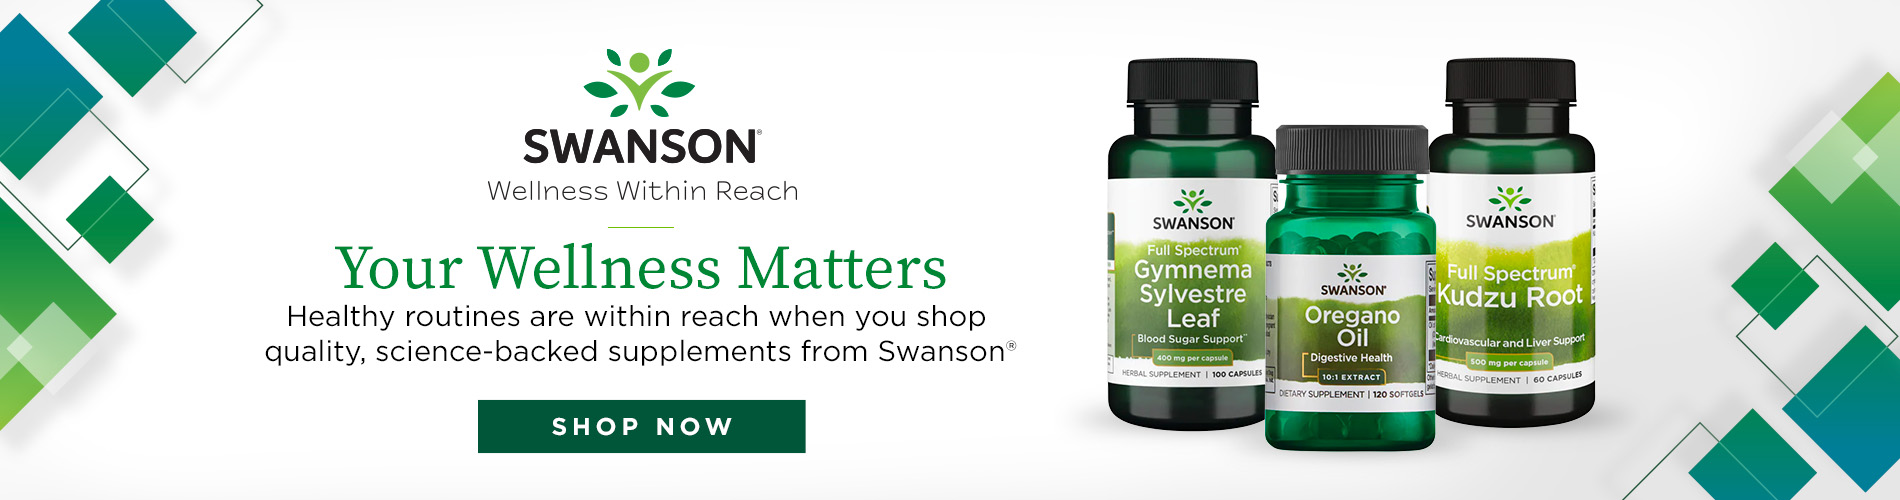 Swanson website banner - your wellness matters 